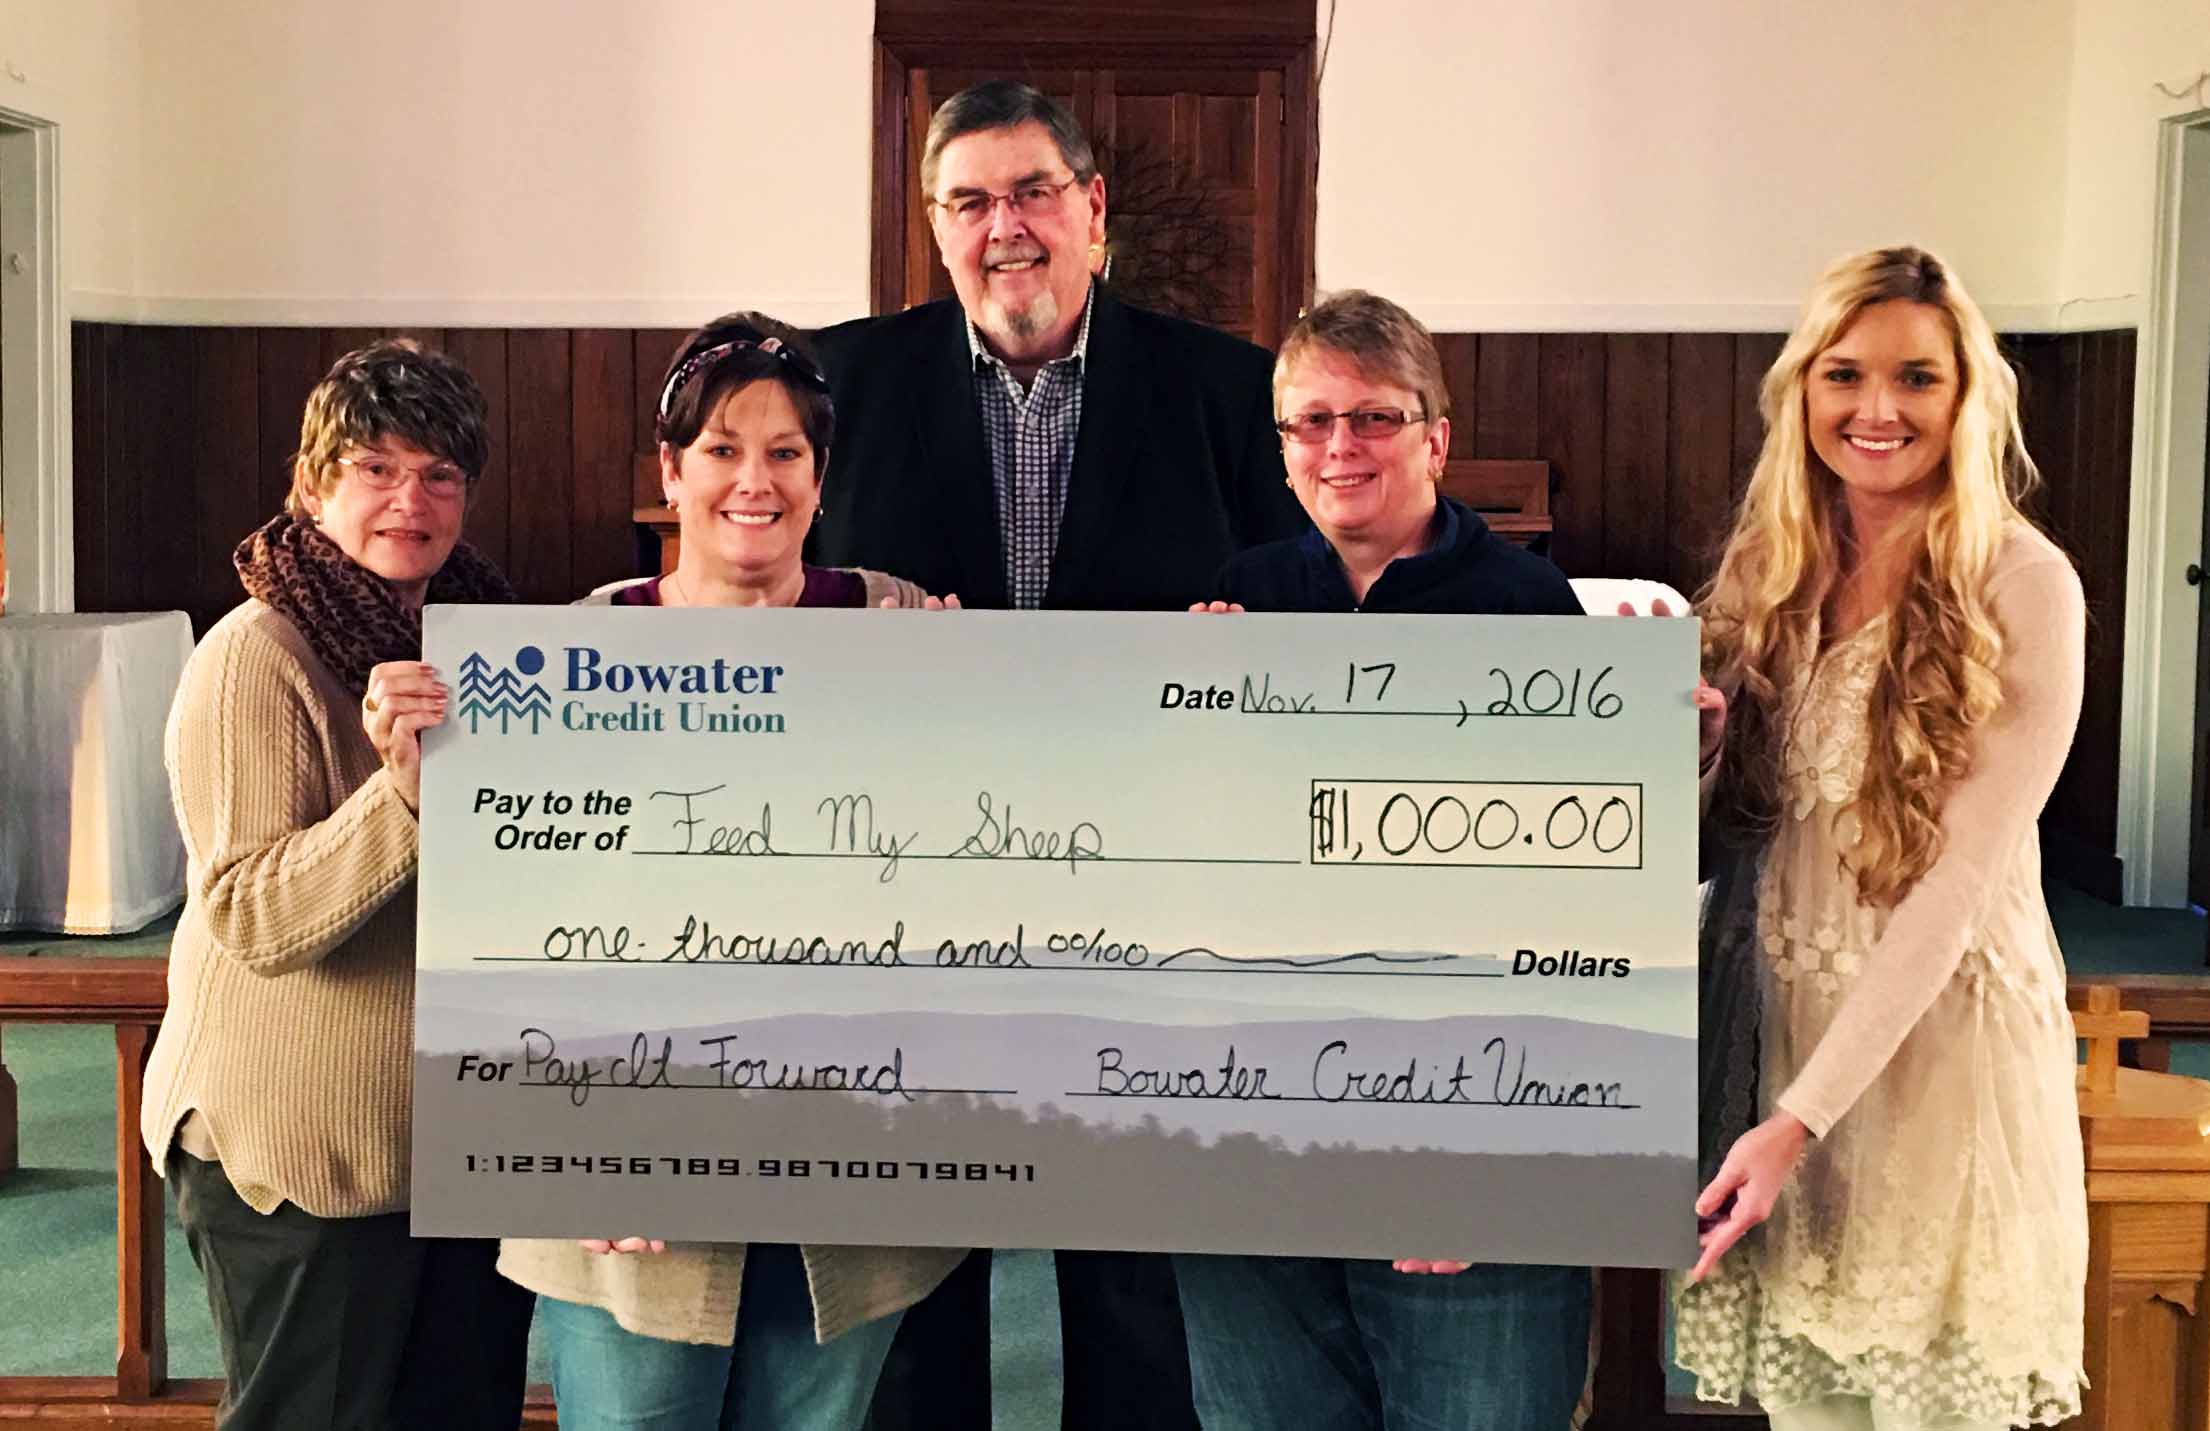 Member Lori Freeman Wins $1,000 for Feed My Sheep - Bowater Credit Union